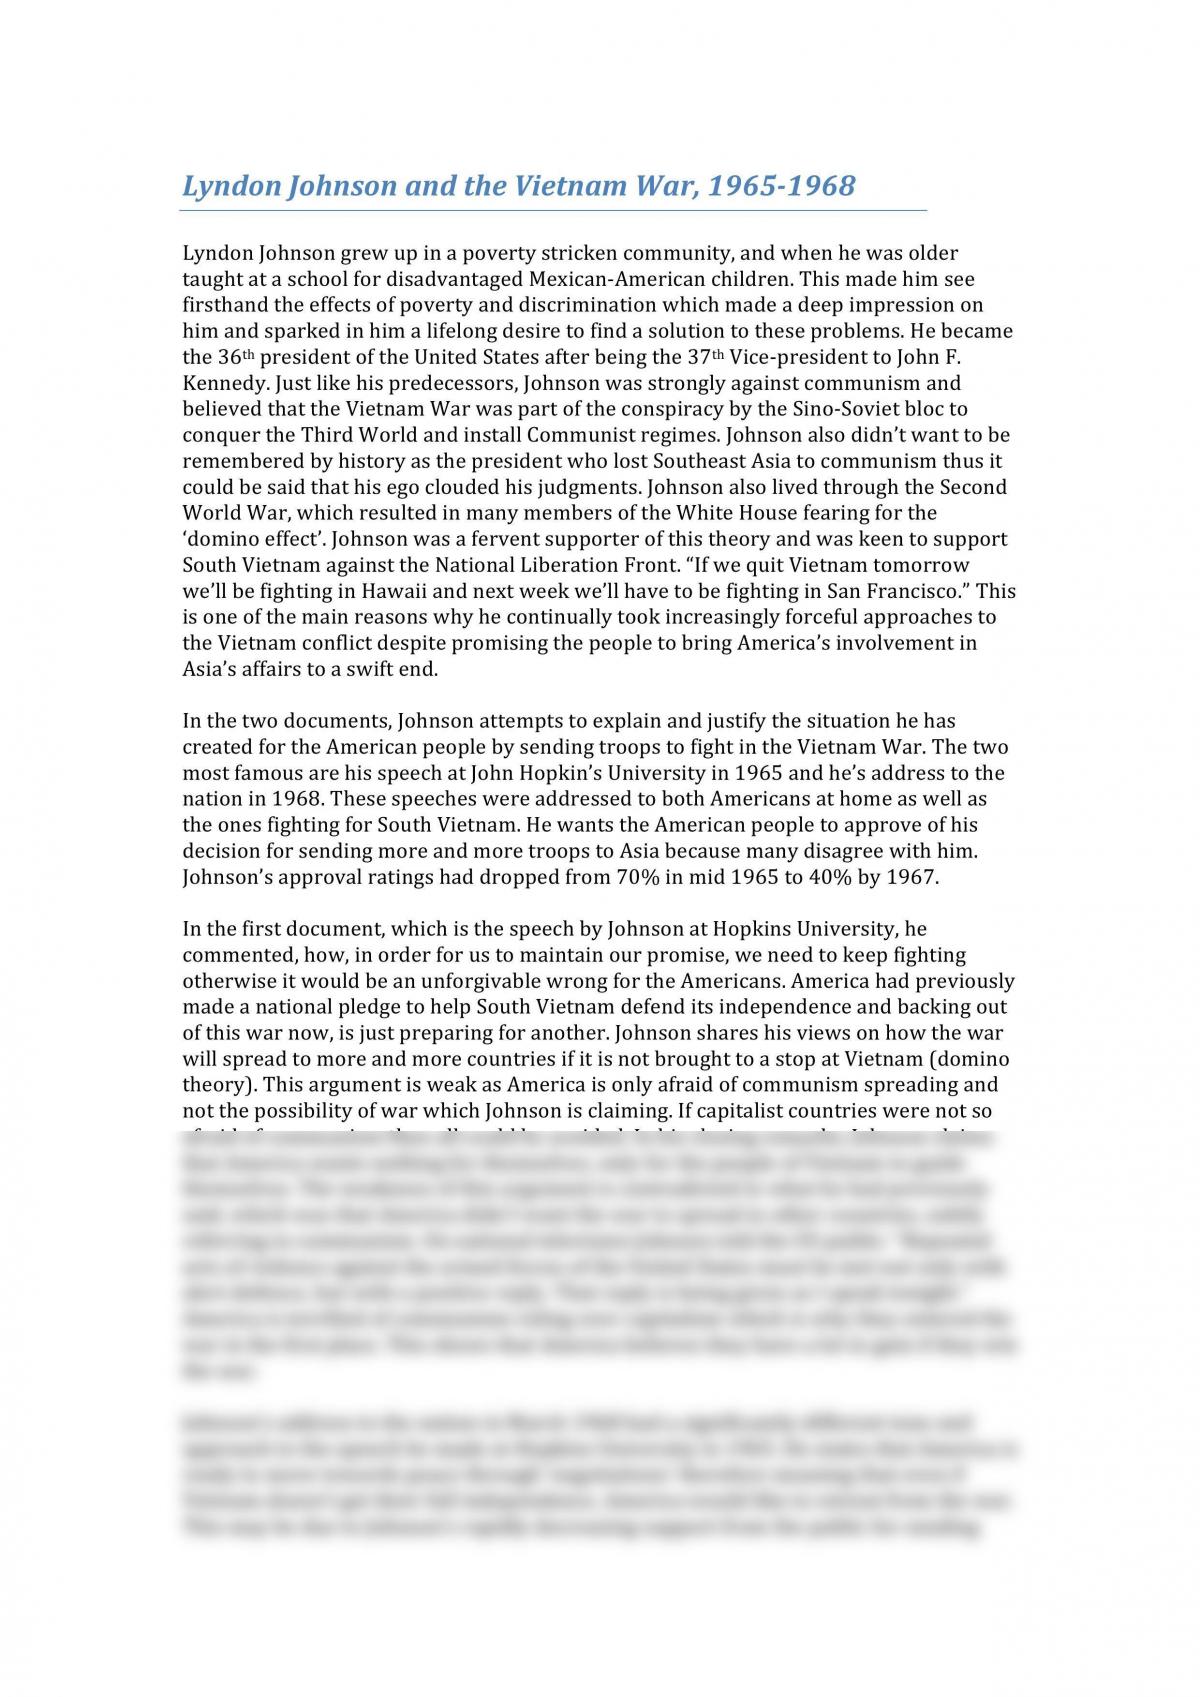 Document Analysis International Politics - Page 1